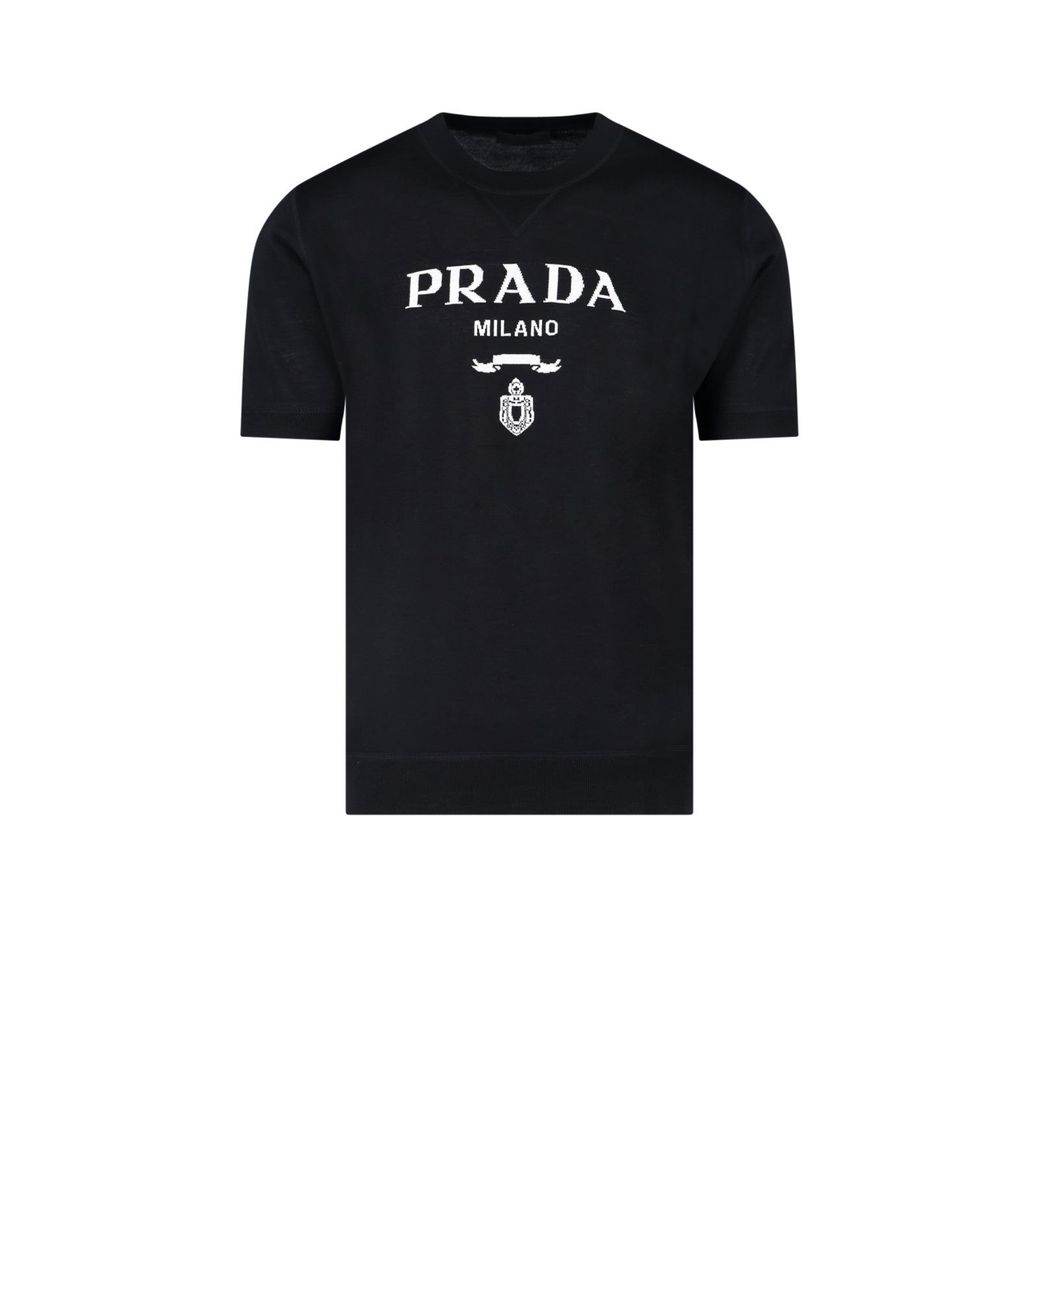 Prada Wool T-shirt in Nero (Black) for Men | Lyst